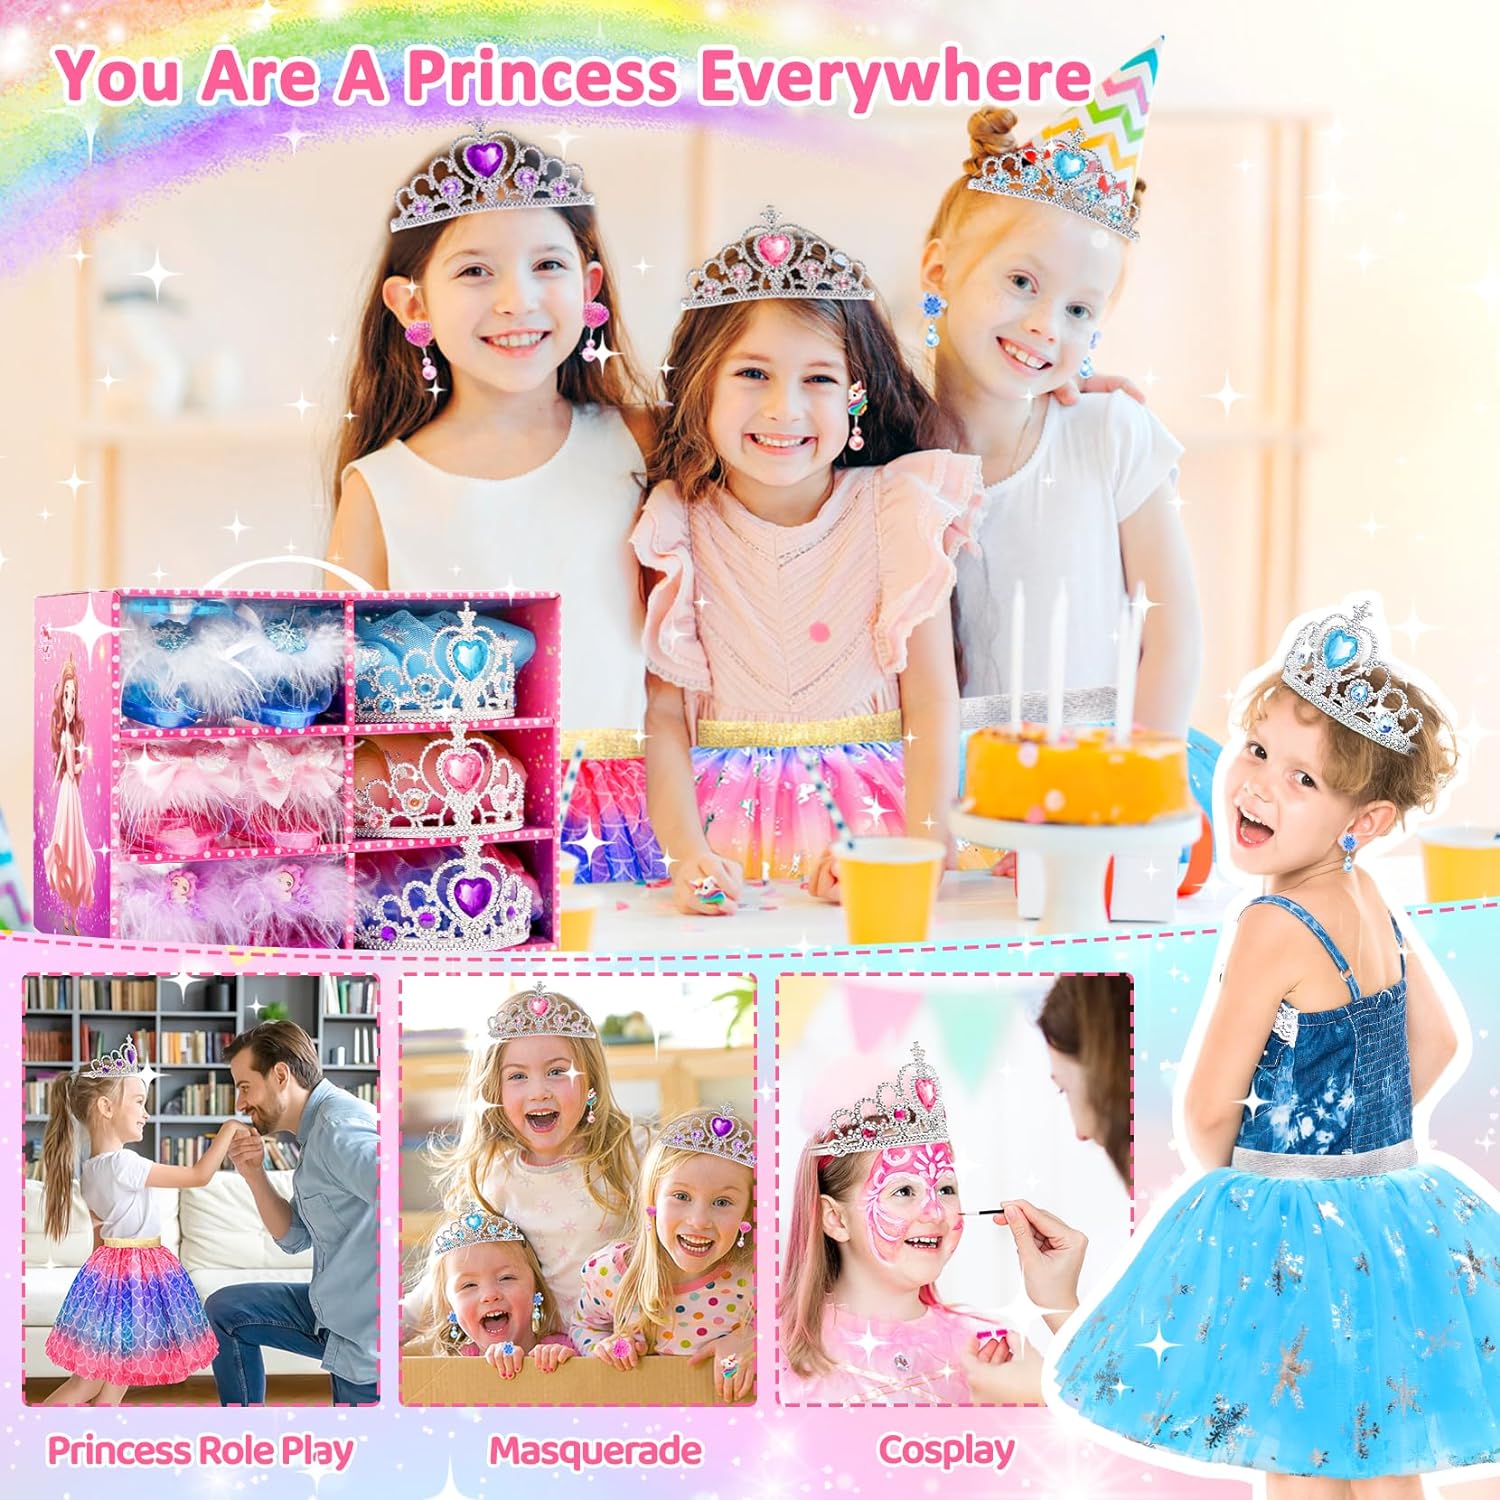 Princess Dresses,Unicorns Gifts,Princess Dress Up Clothes,Skirts,Princess Shoes,Crowns,Jewery Cykapu